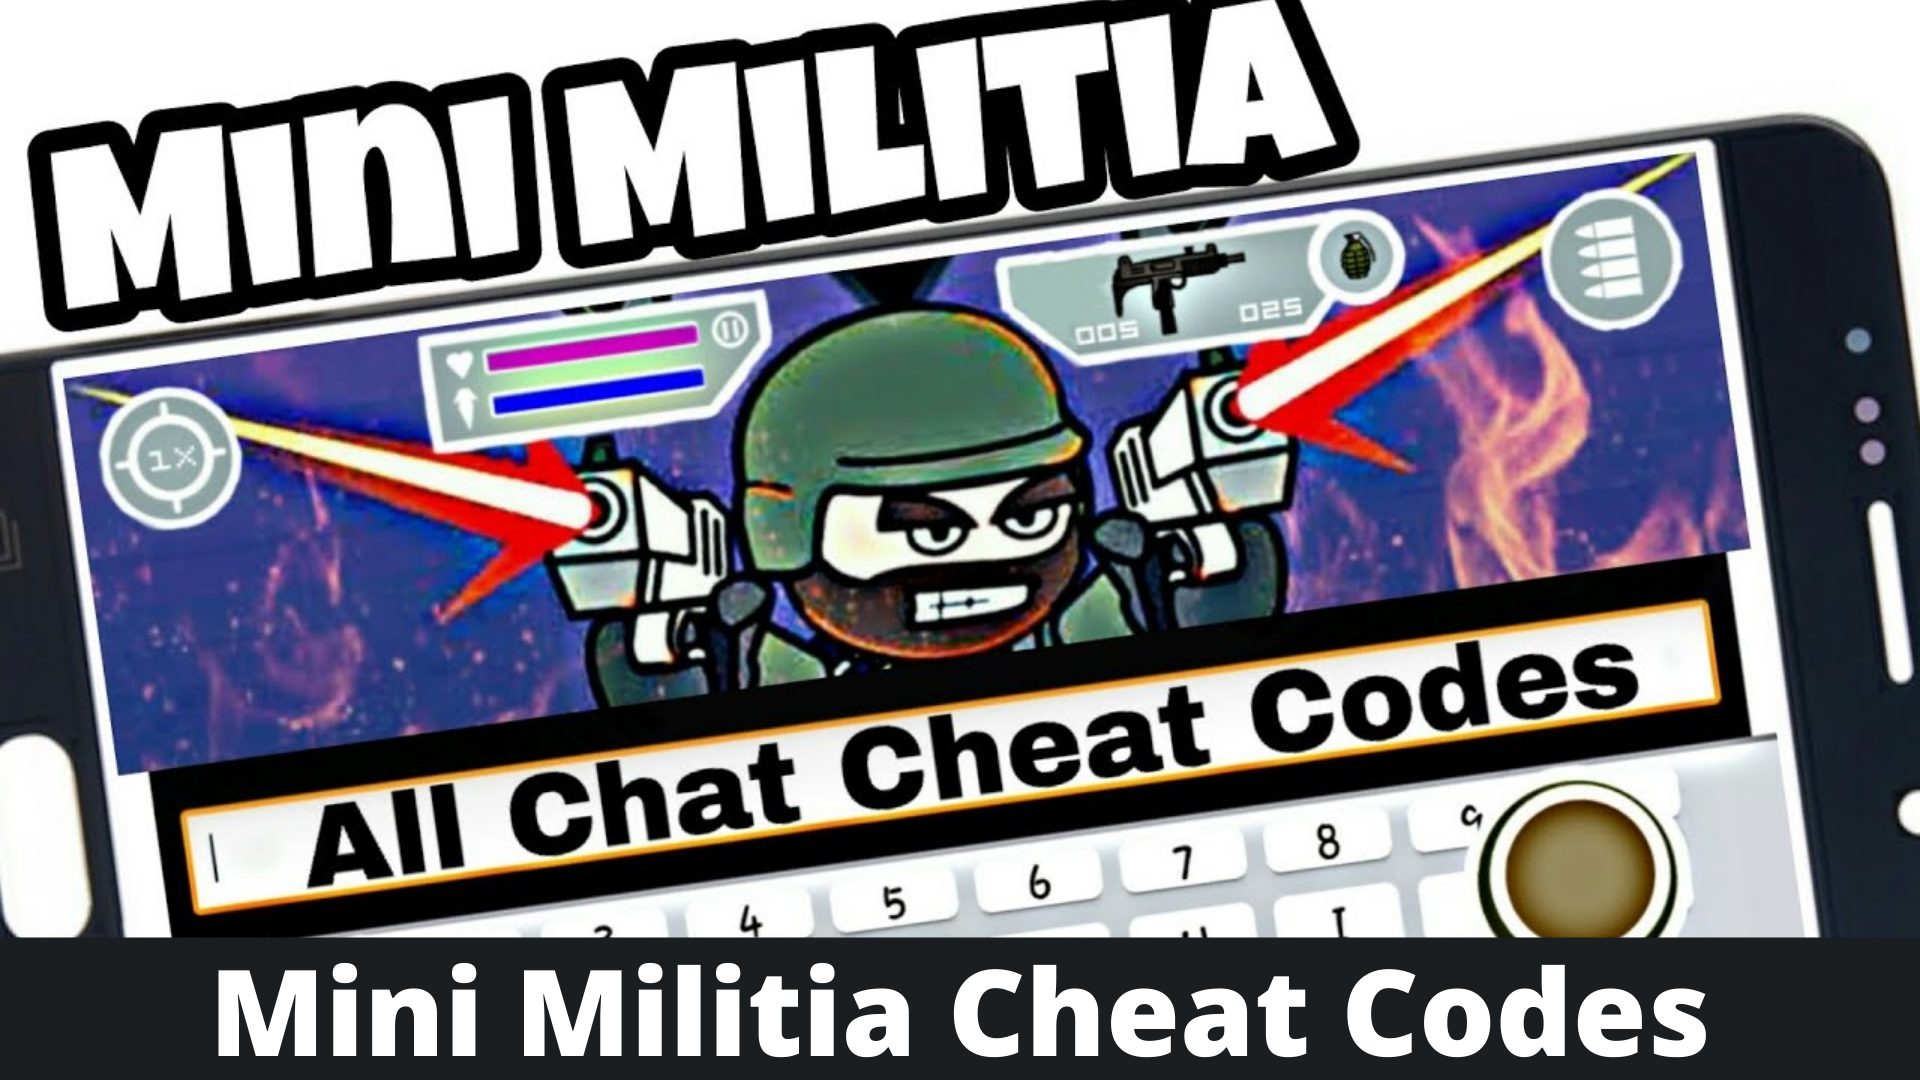 Mini Militia Cheat Codes